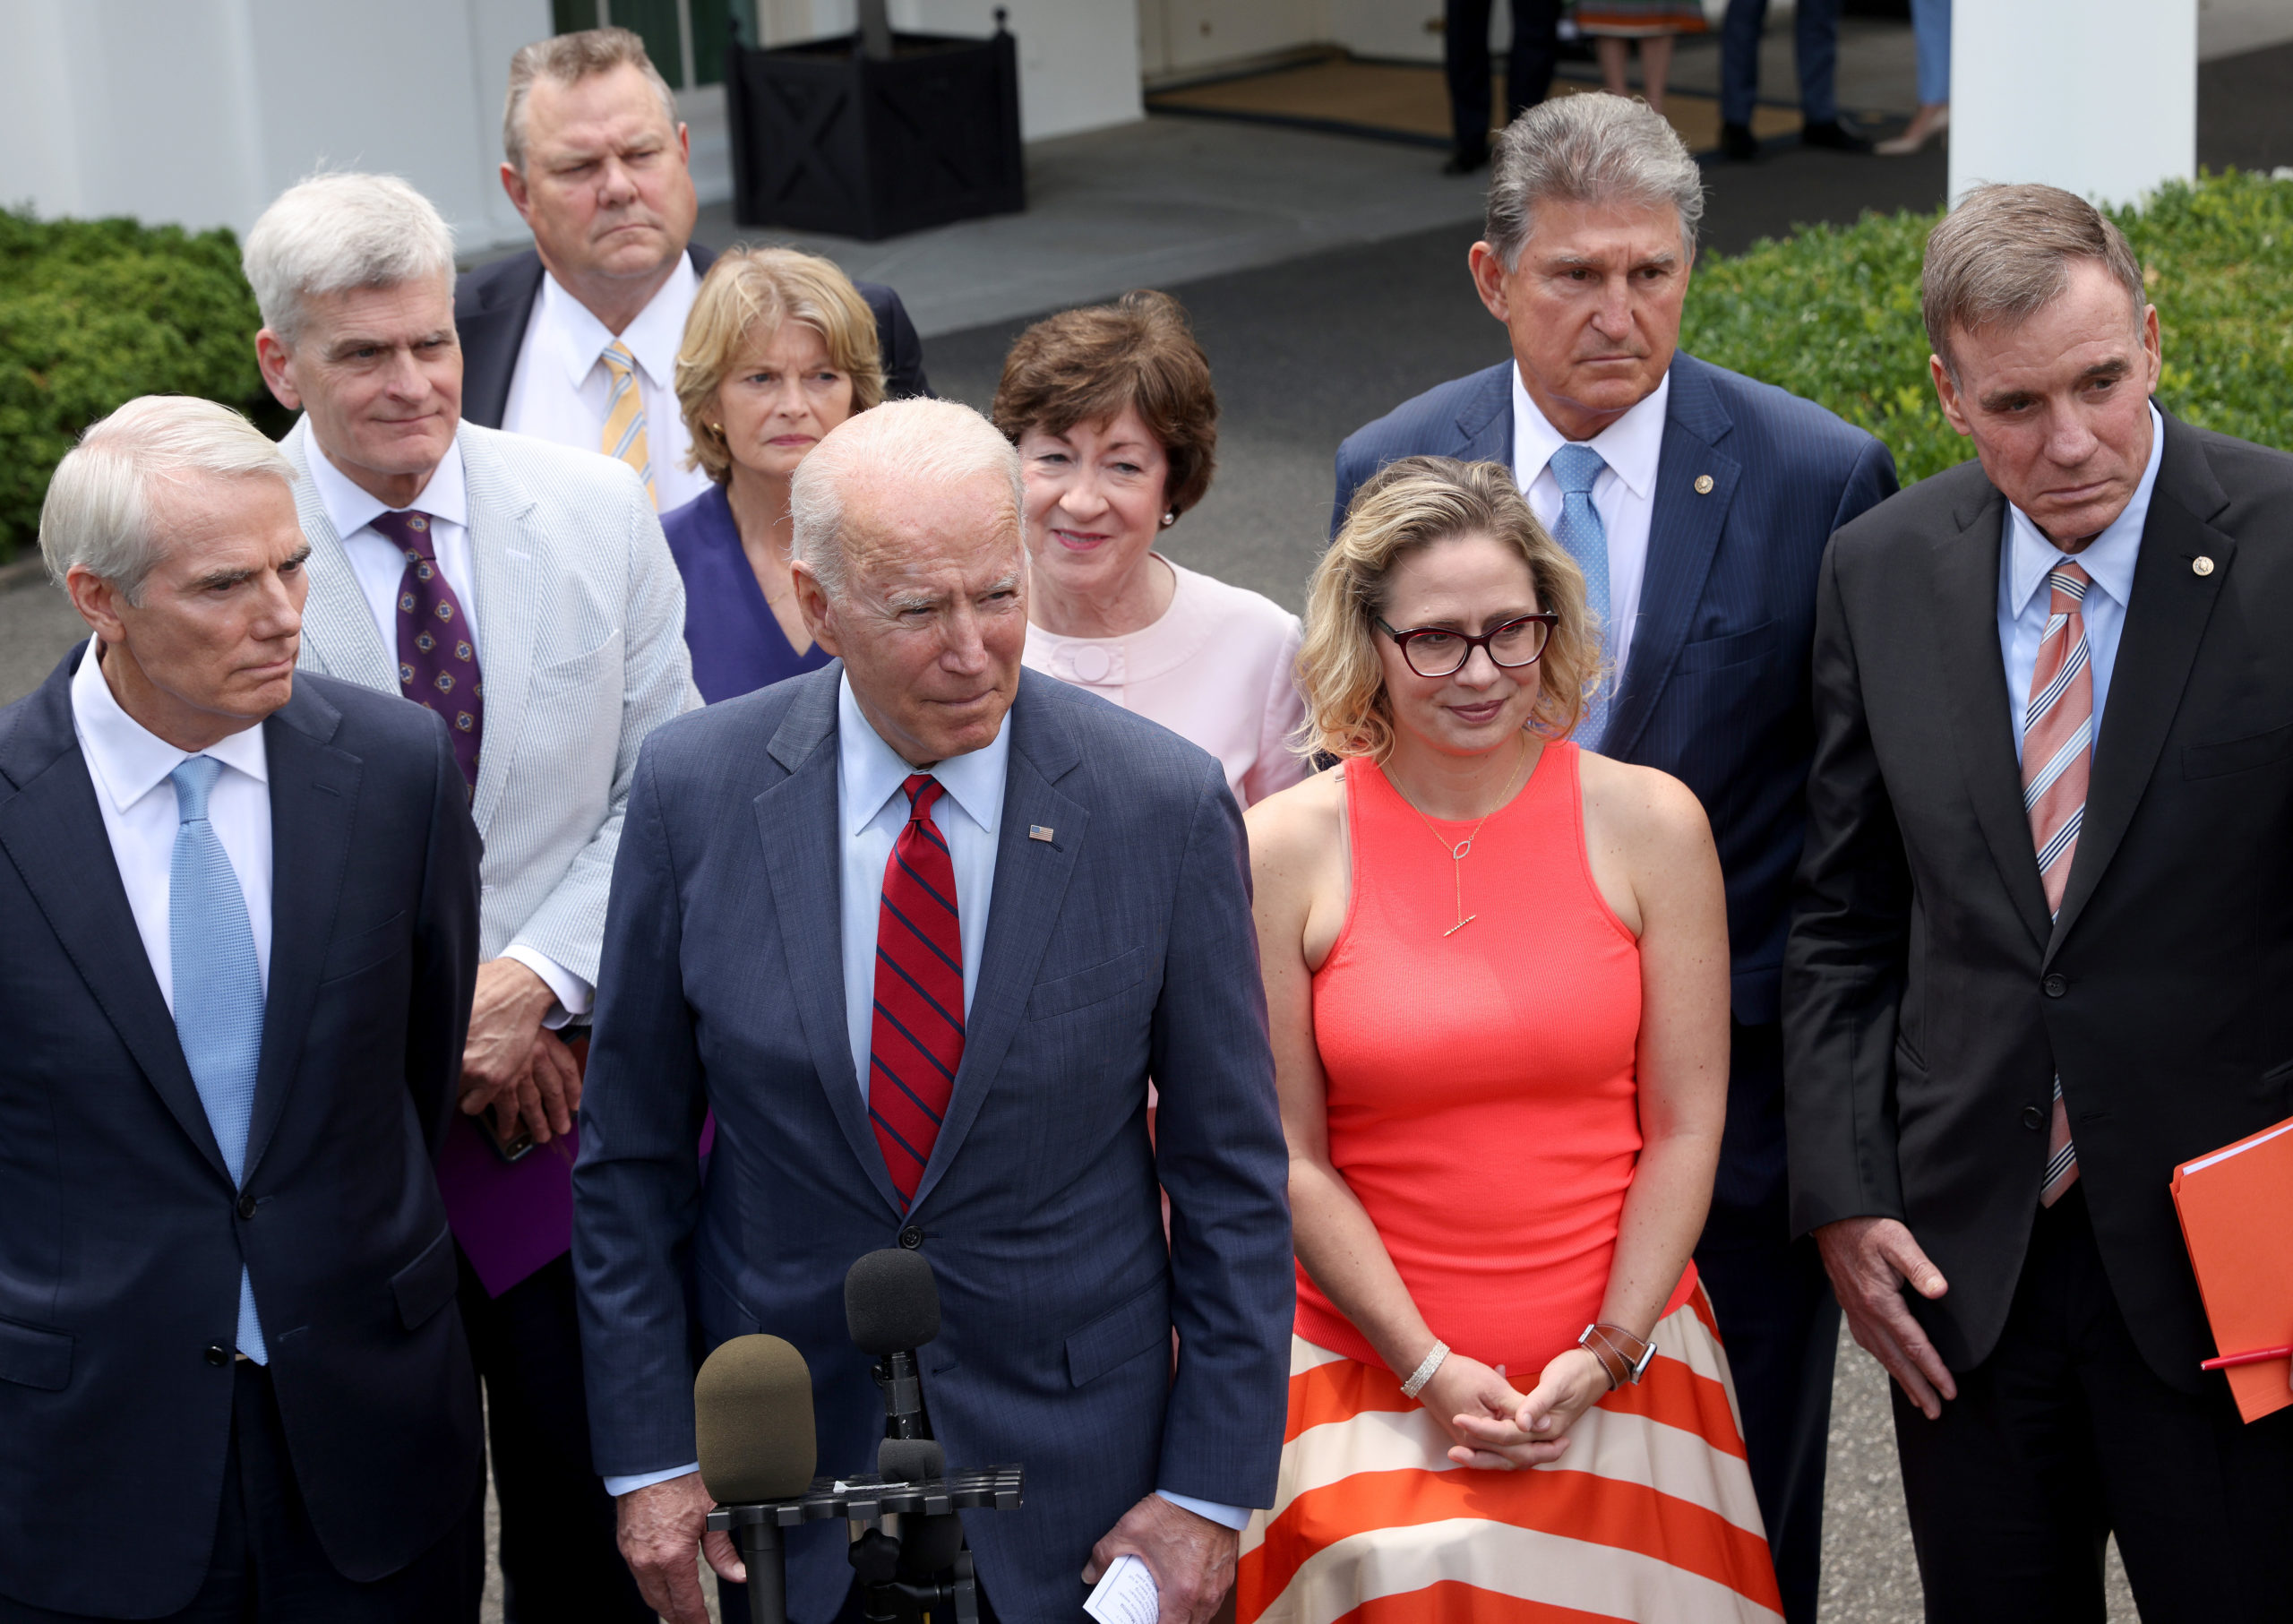 WASHINGTON, DC - JUNE 24: U.S. President Joe Biden speaks outside the White House with a bipartisan group of senators after meeting on an infrastructure deal June 24, 2021 in Washington, DC. From left to right are Sen. Rob Portman (R-OH), Sen. Bill Cassidy (R-LA), Sen. Jon Tester (D-MT), Sen. Lisa Murkowski (R-AK), Sen. Susan Collins (R-ME), Sen. Kyrsten Sinema (D-AZ), Sen. Joe Manchin (D-WV), and Sen. Mark Warner (D-VA). Biden indicated that a framework for an infrastructure bill is in place following the meeting. (Photo by Win McNamee/Getty Images)